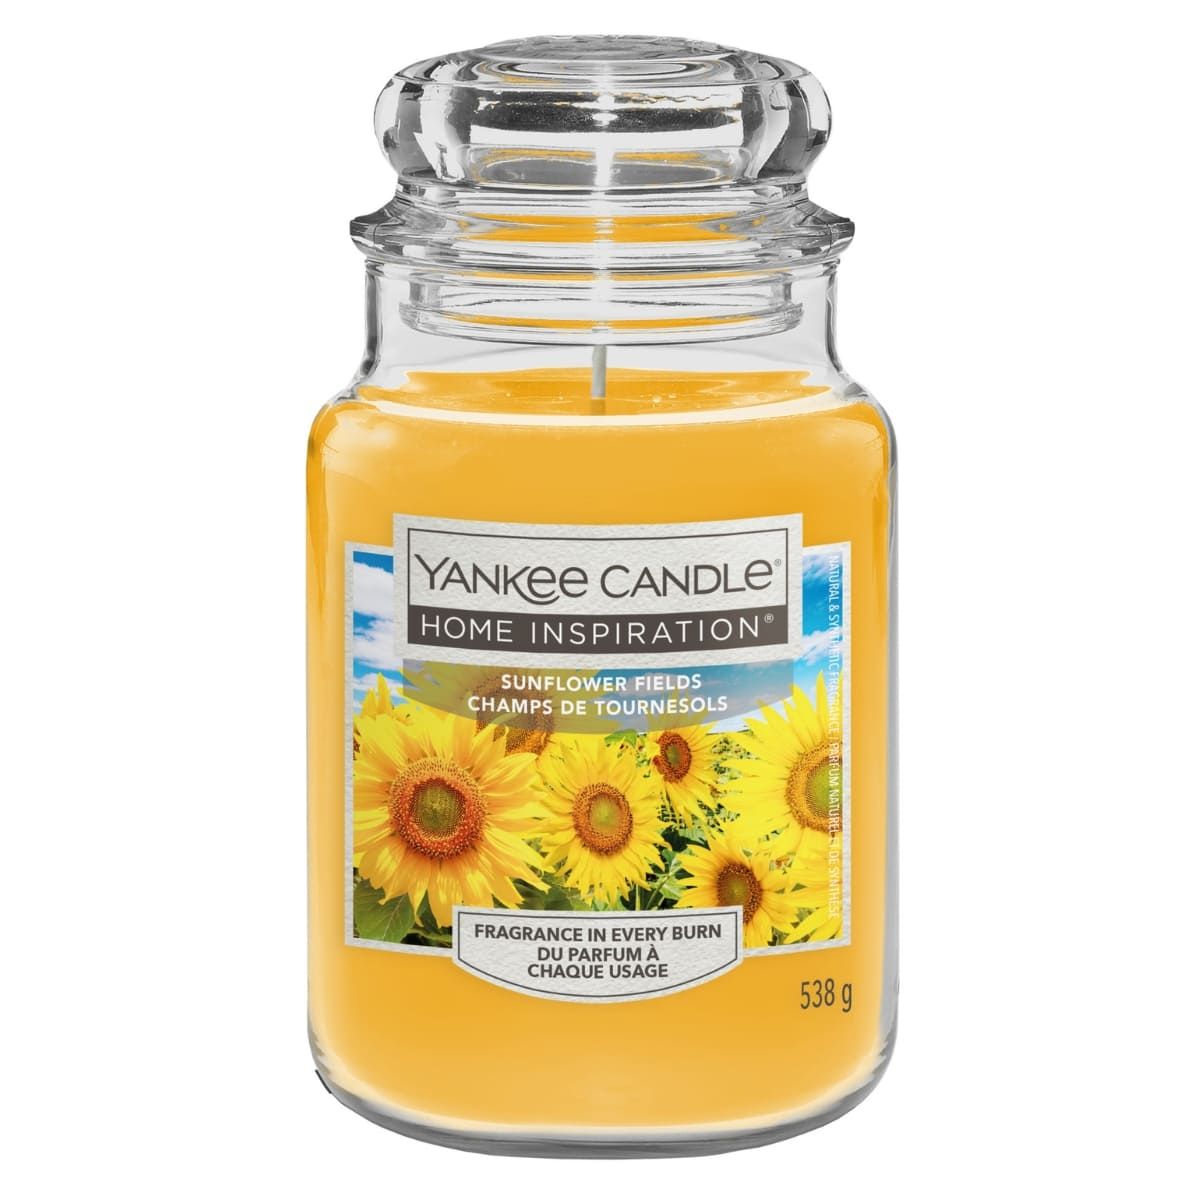 Ароматическая Свеча Yankee Candle Home Inspiration Sunflower Fields, 538 гр ароматическая свеча большая village candle tropical getaway 538 гр